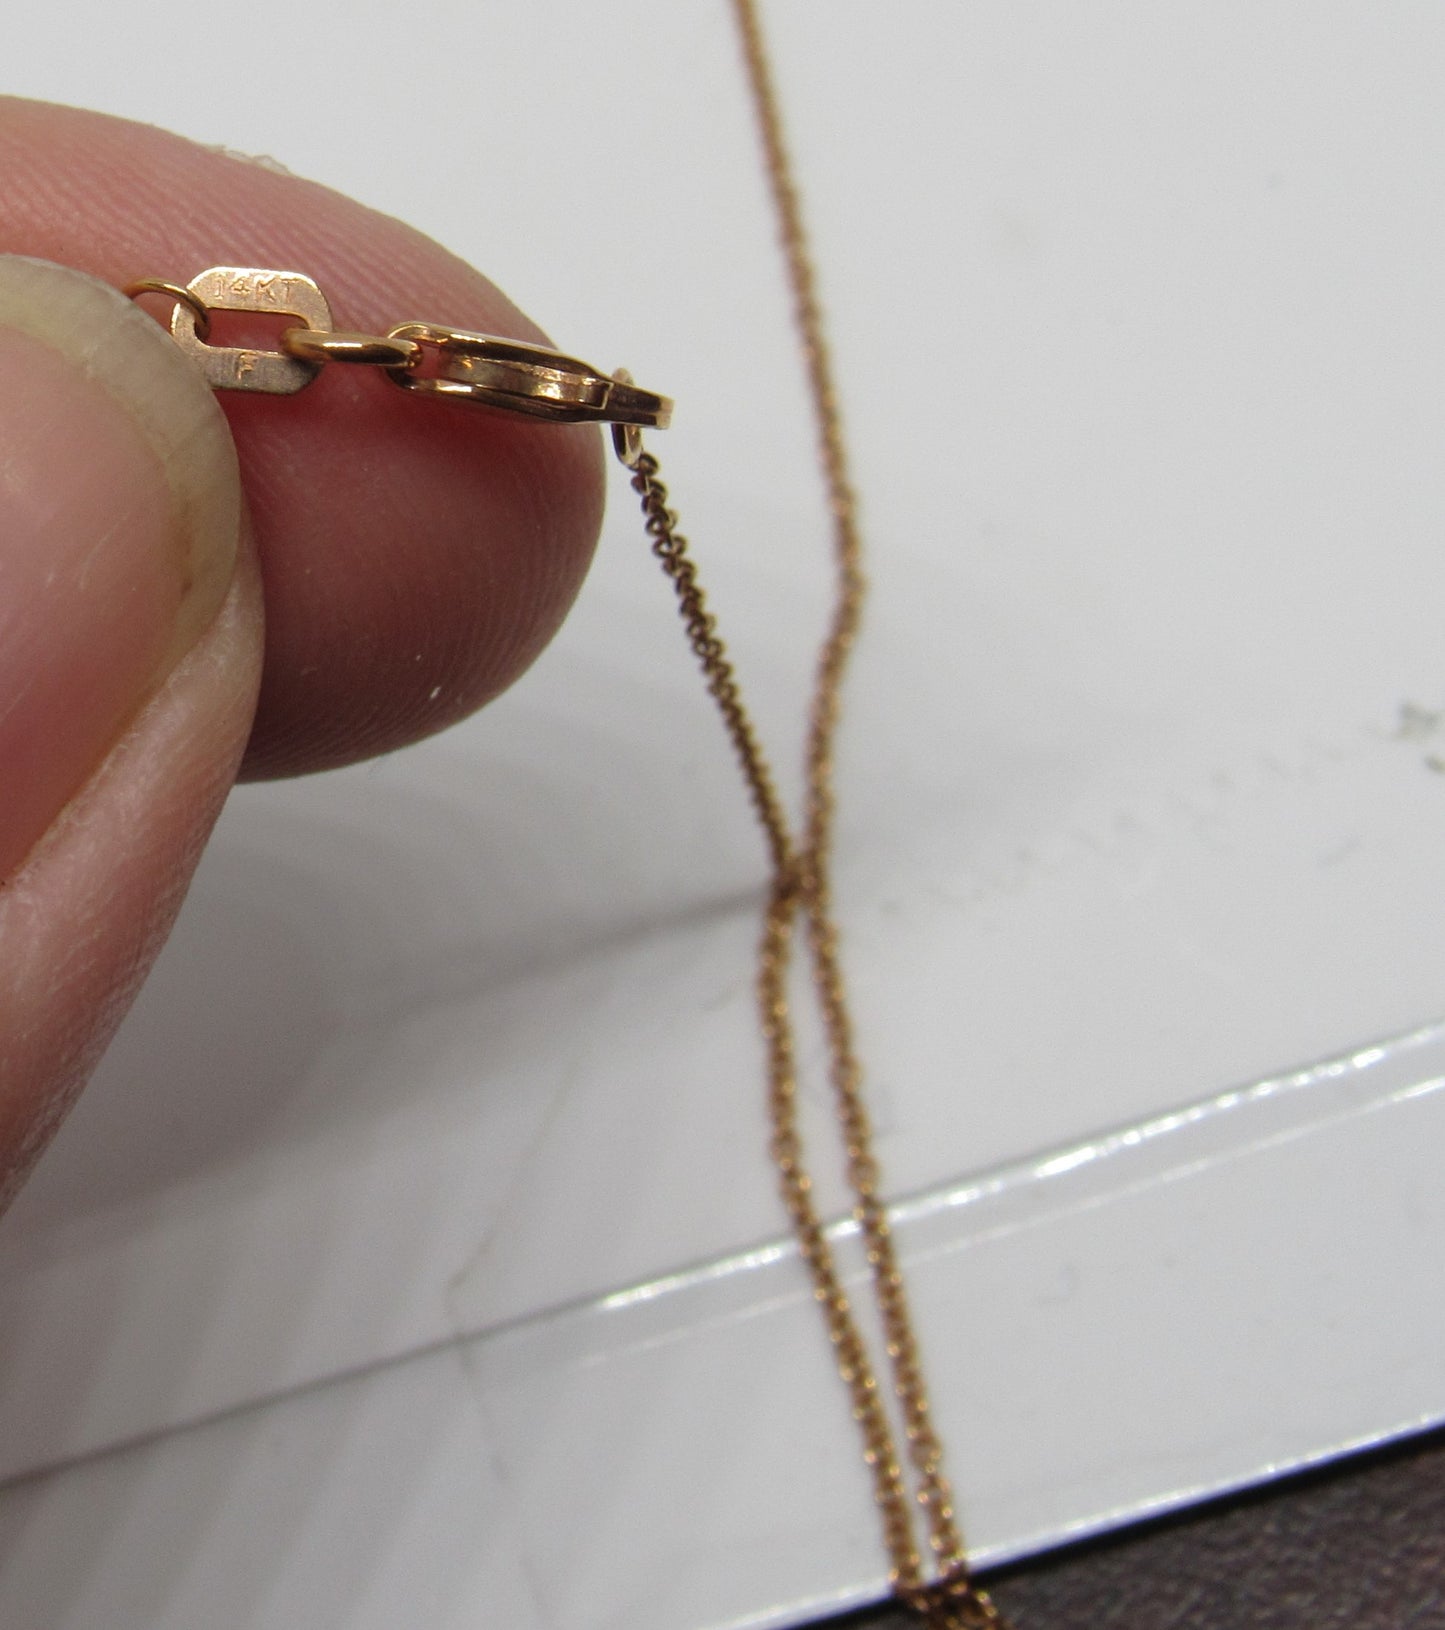 LeVian 14k Rose Gold Chocolate Diamonds Smoky Quartz Pendant Necklace - 18 in